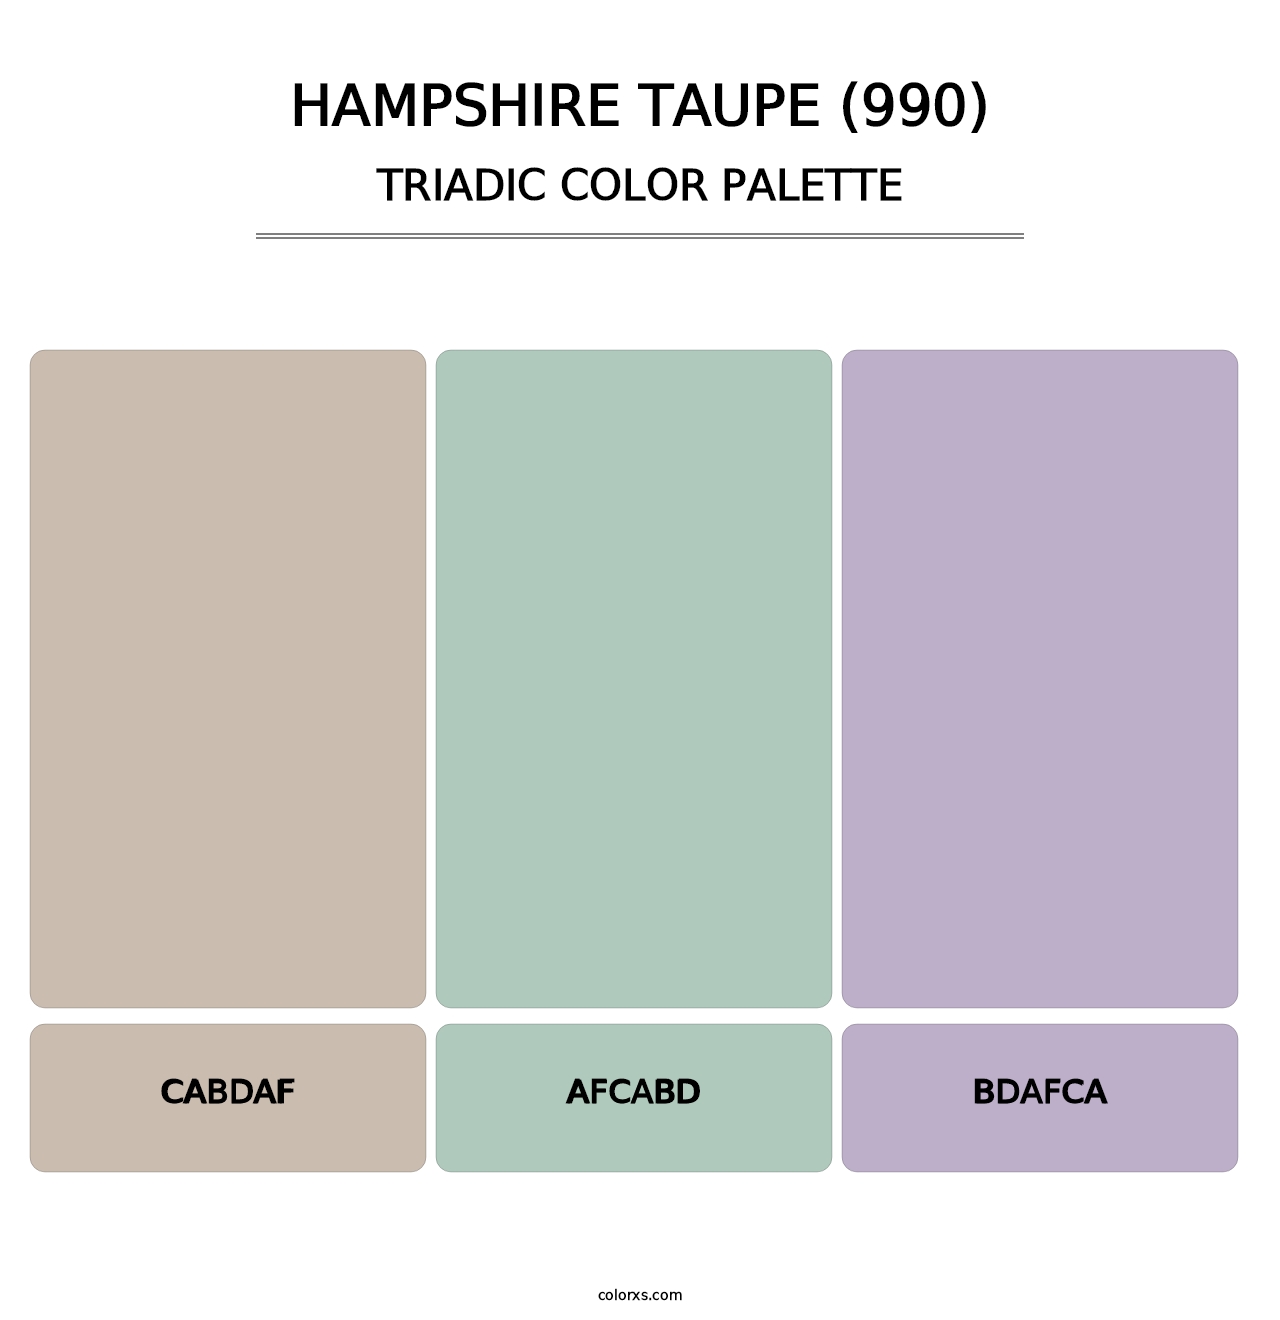 Hampshire Taupe (990) - Triadic Color Palette